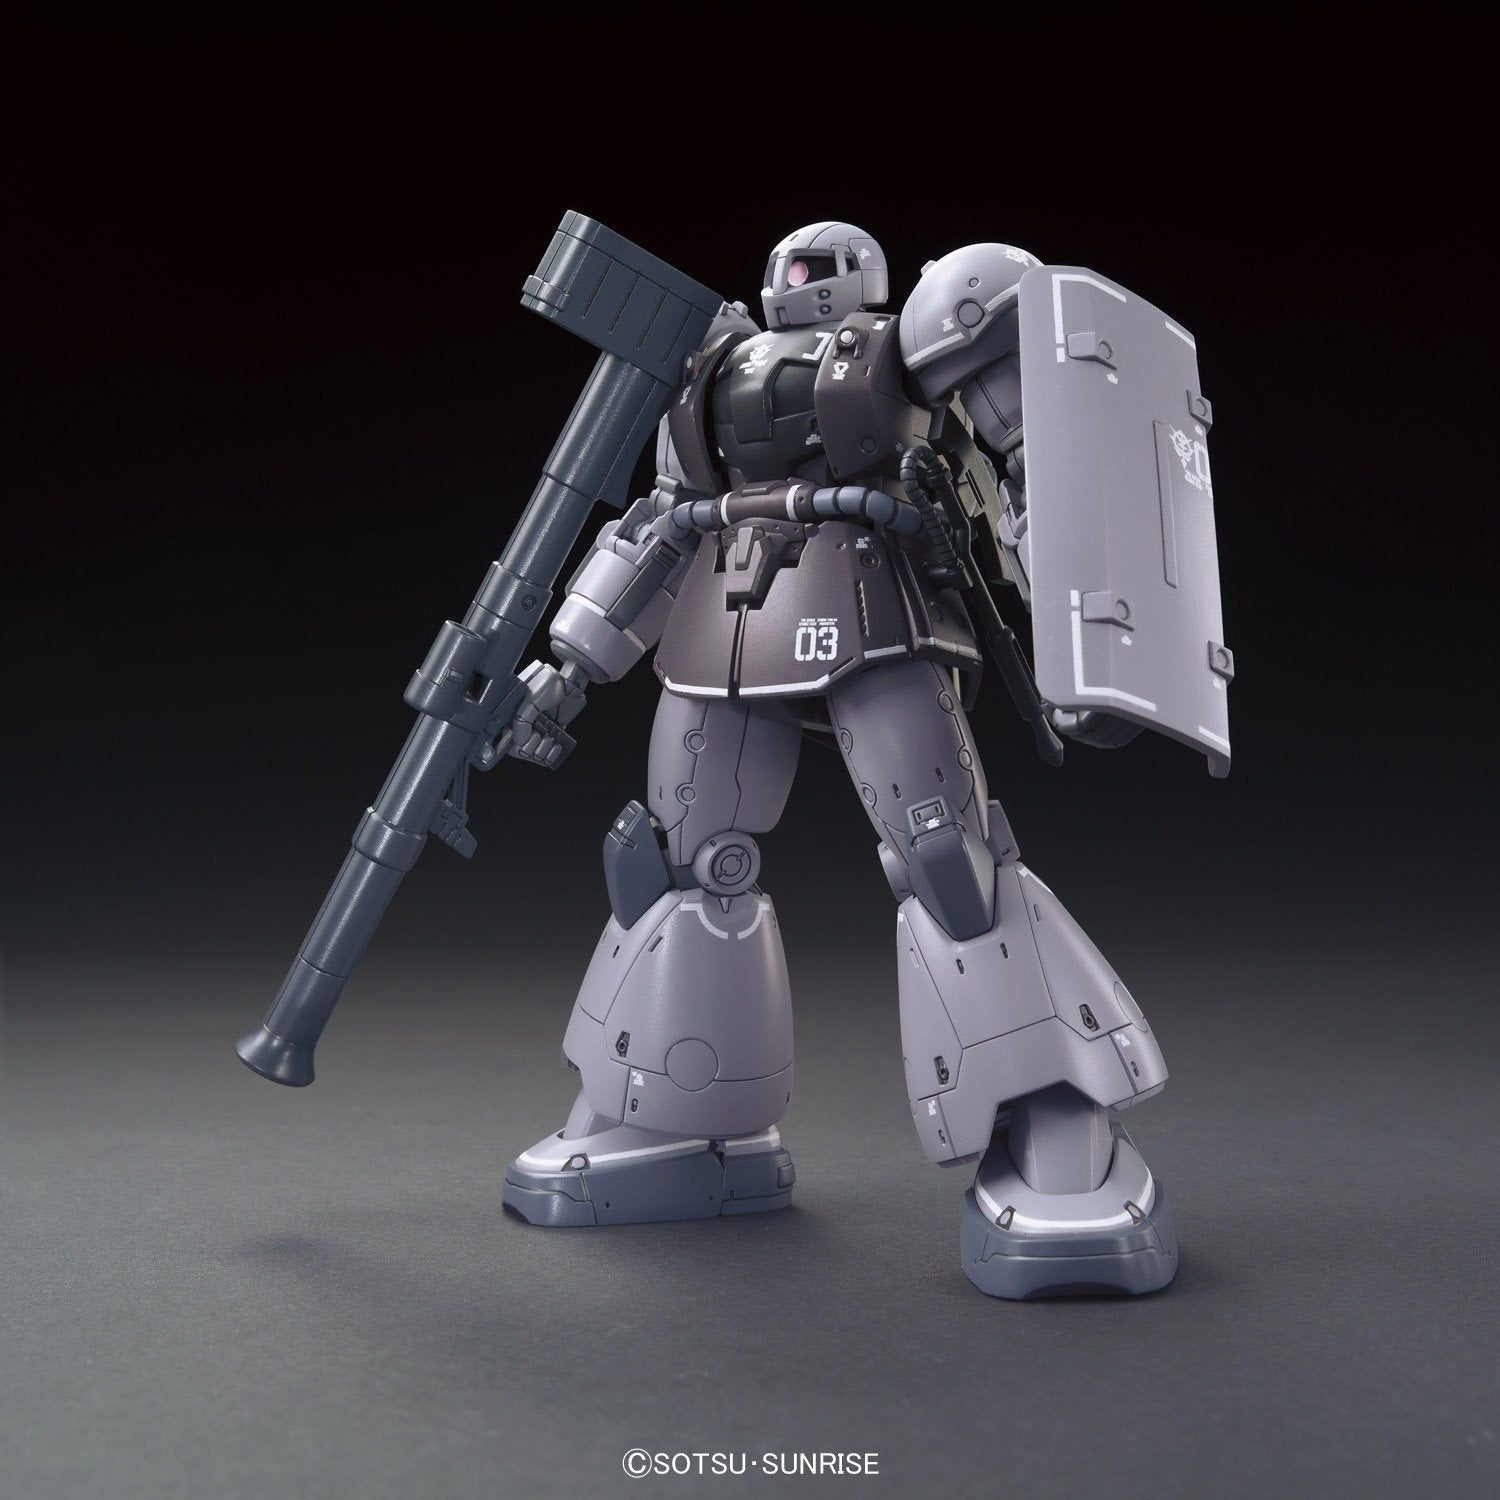 Bandai HG Gundam the Origin YMS-03 Waff - BanzaiHobby